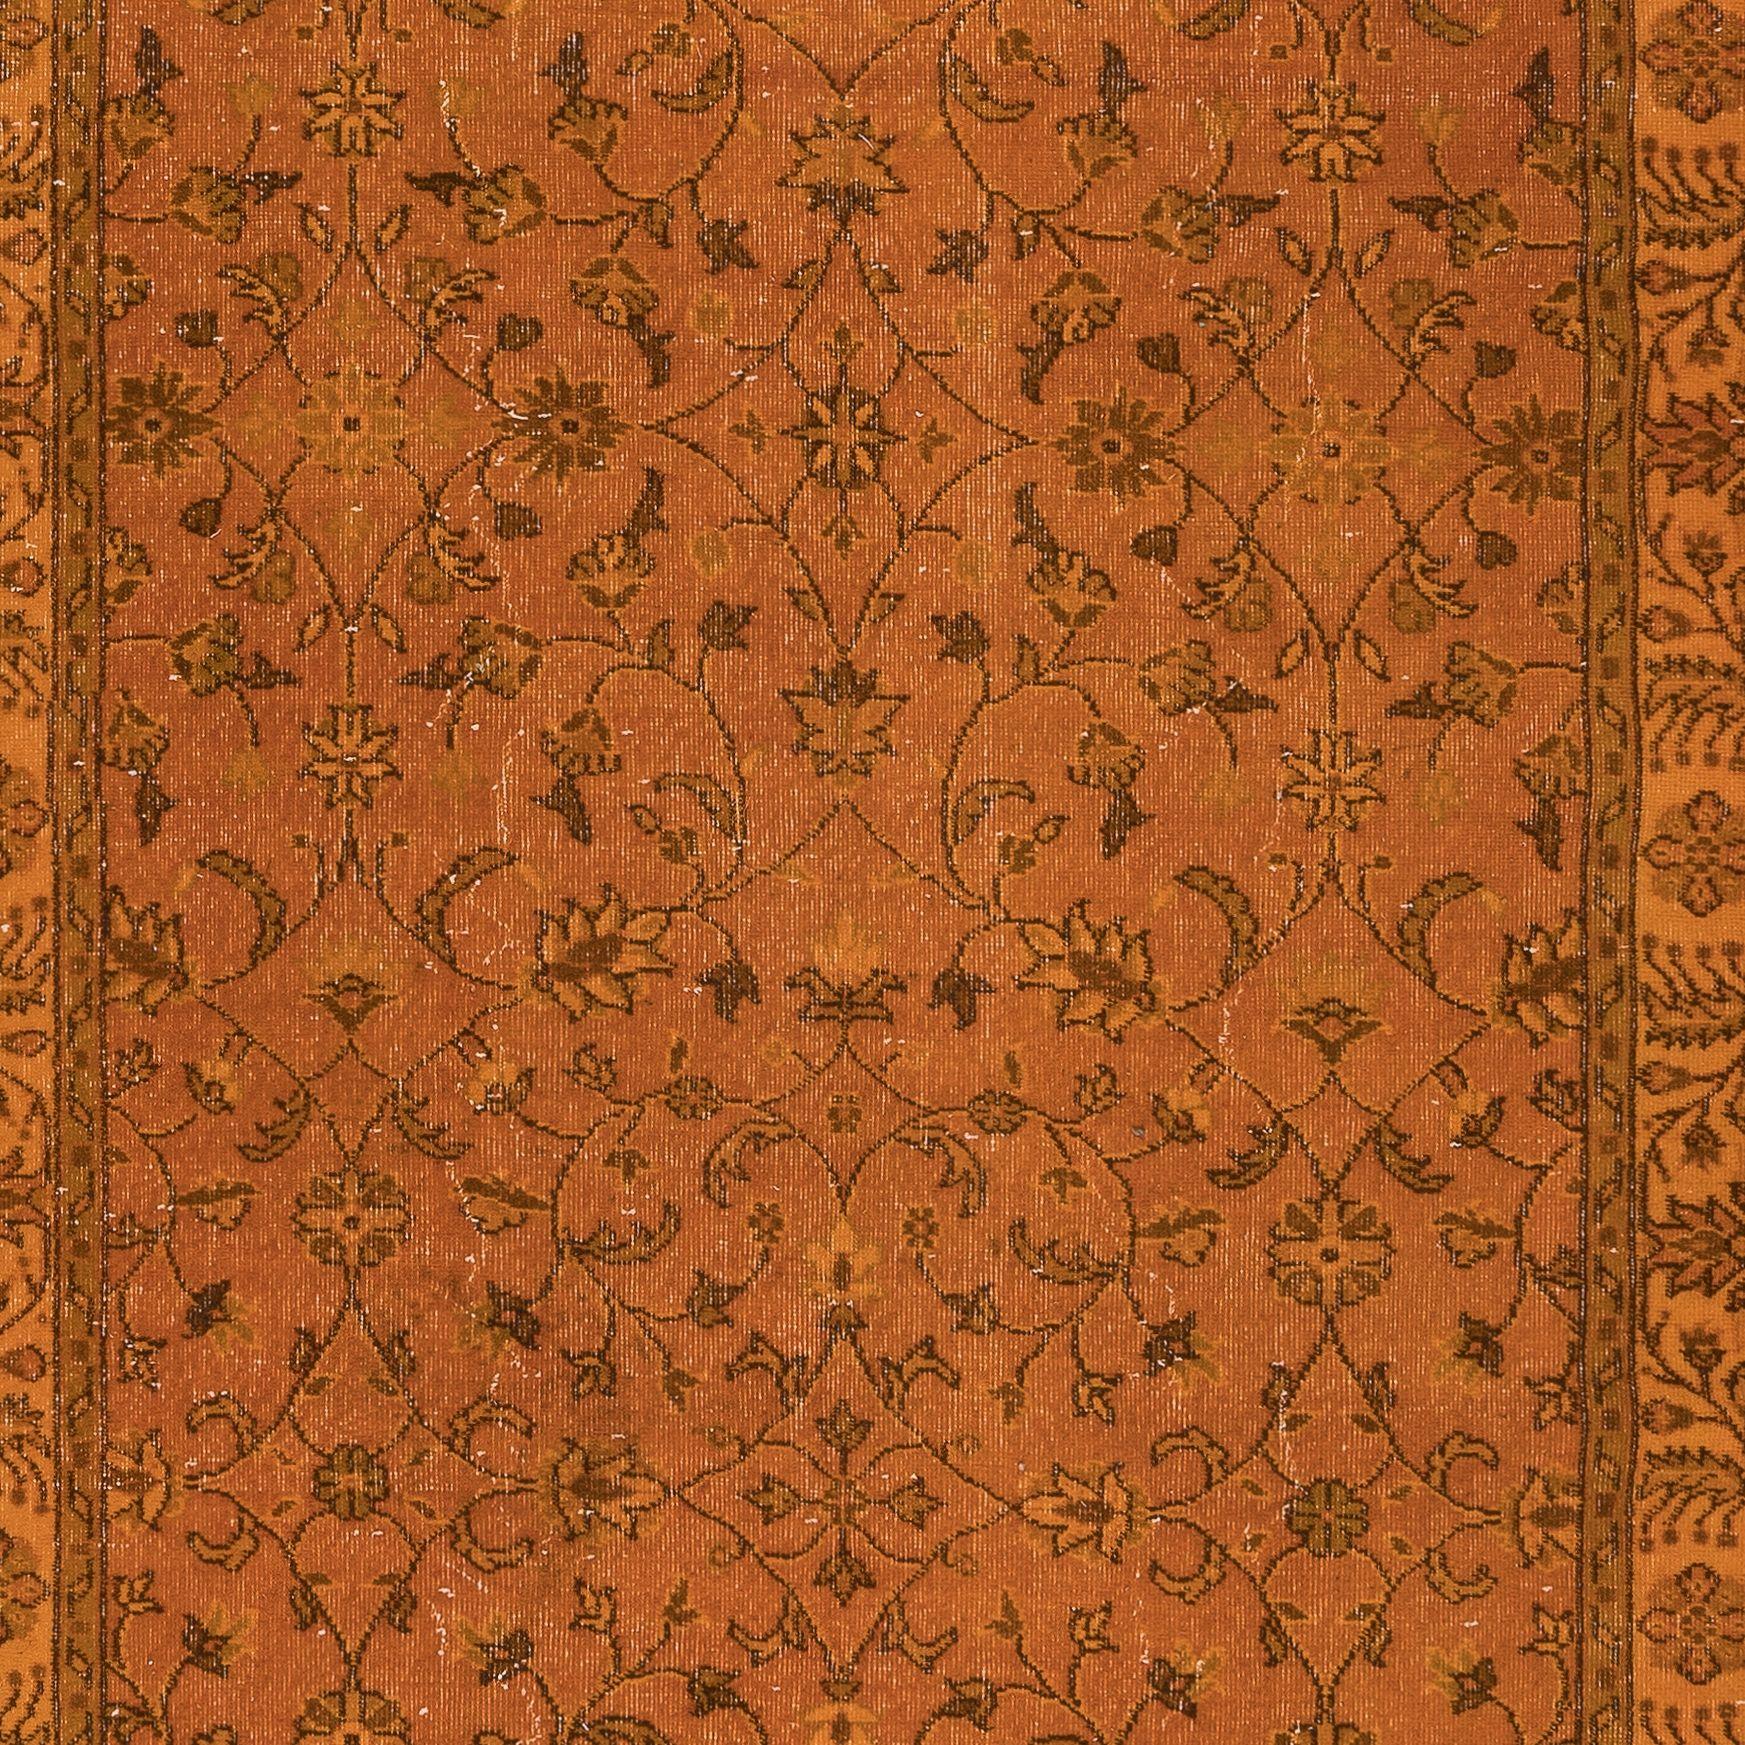 Hand-Knotted 6x9.8 Ft Hand-Made Turkish Area Rug in Orange, Modern Floral Design Carpet For Sale